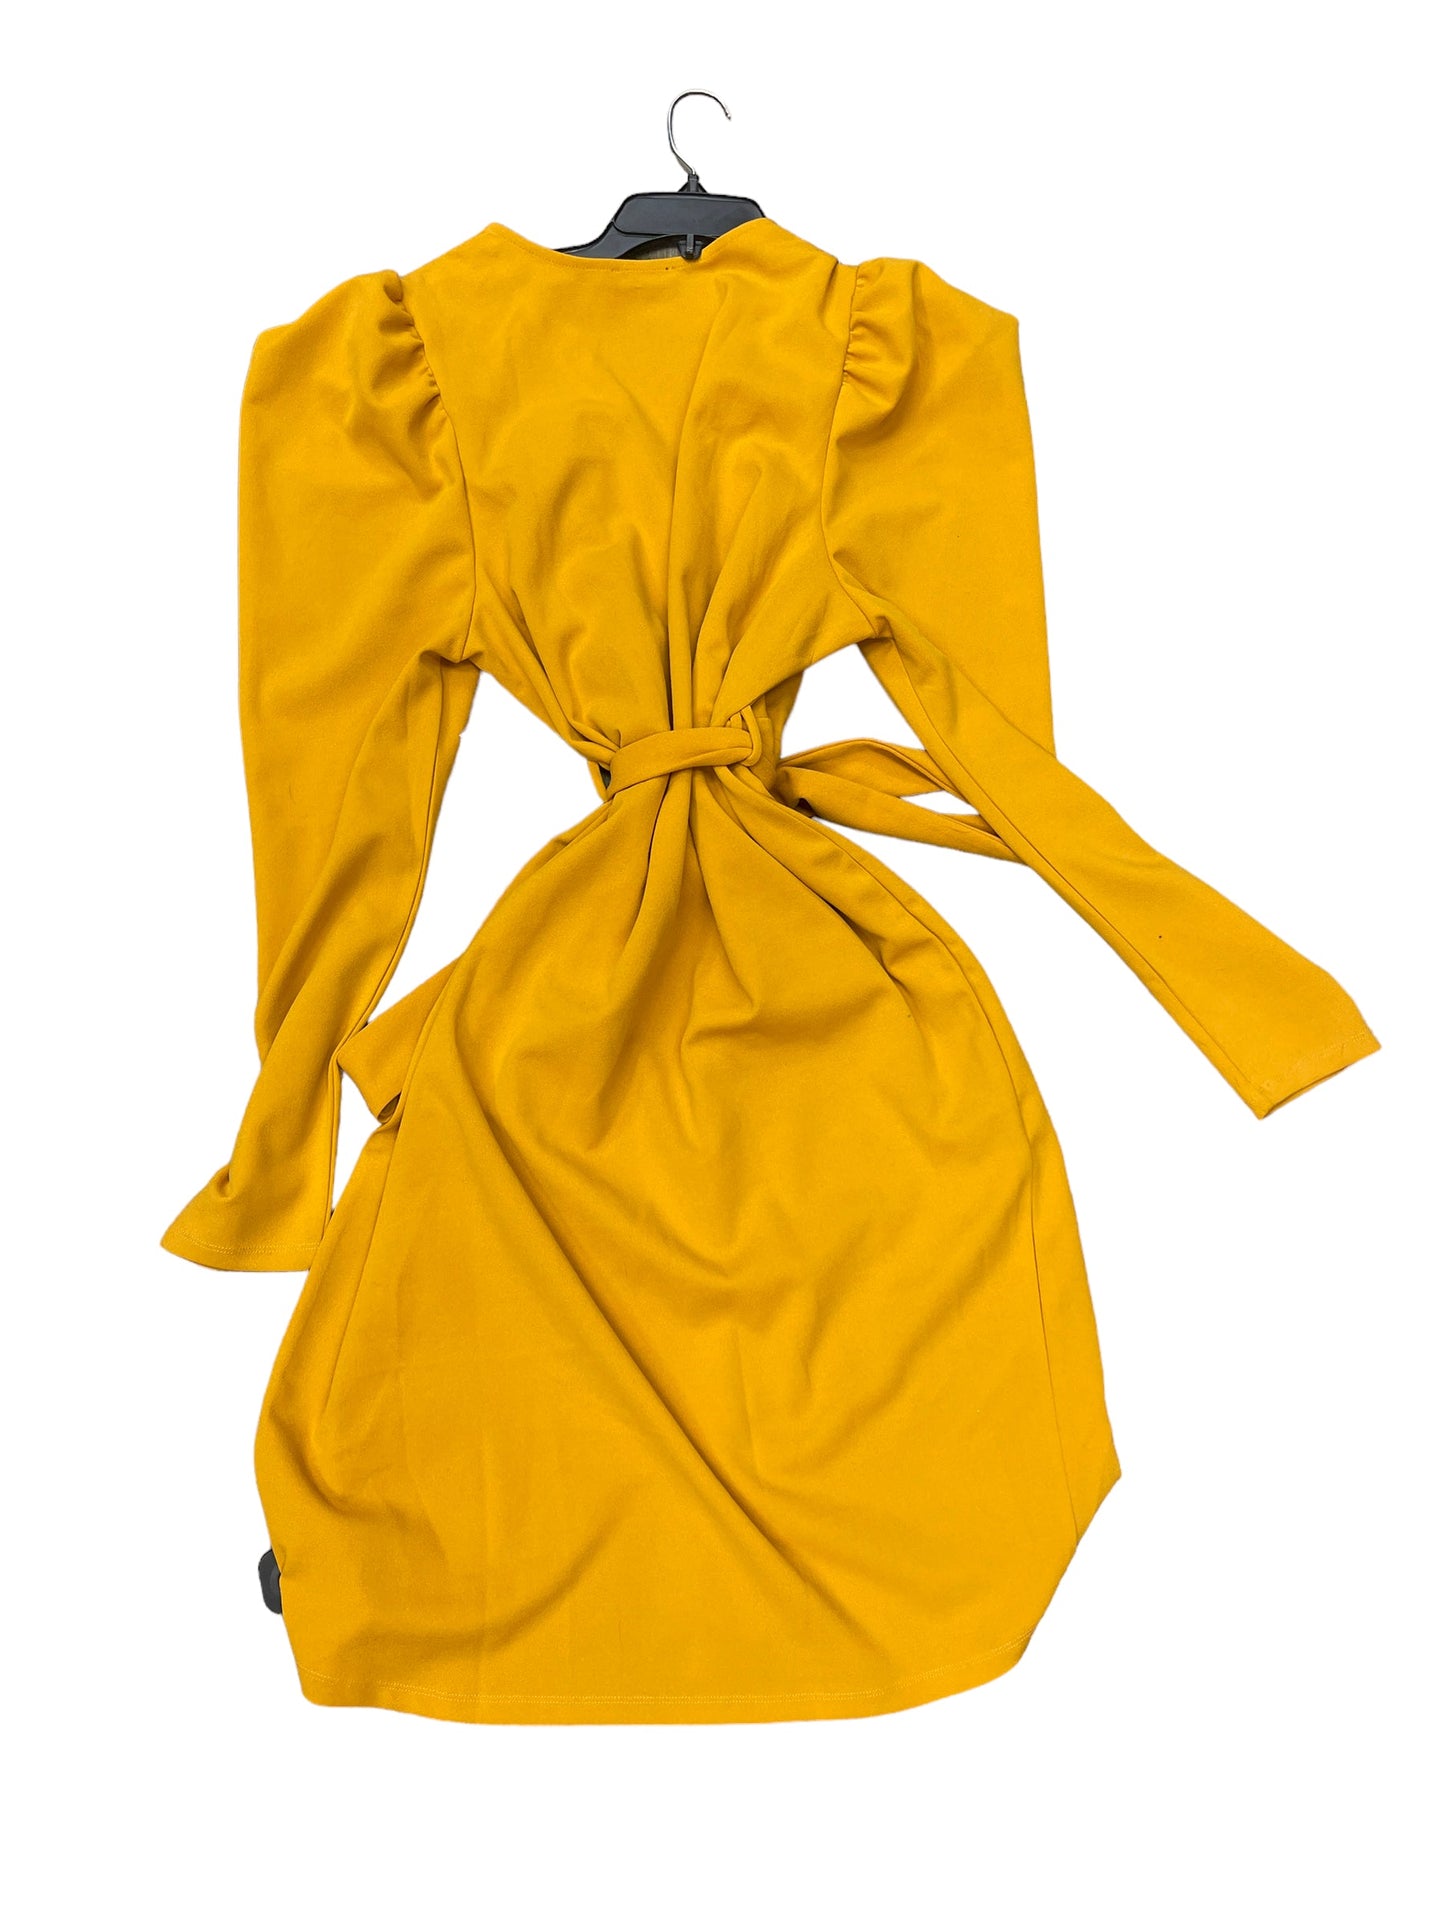 Dress Casual Midi By Fashion Nova  Size: 24